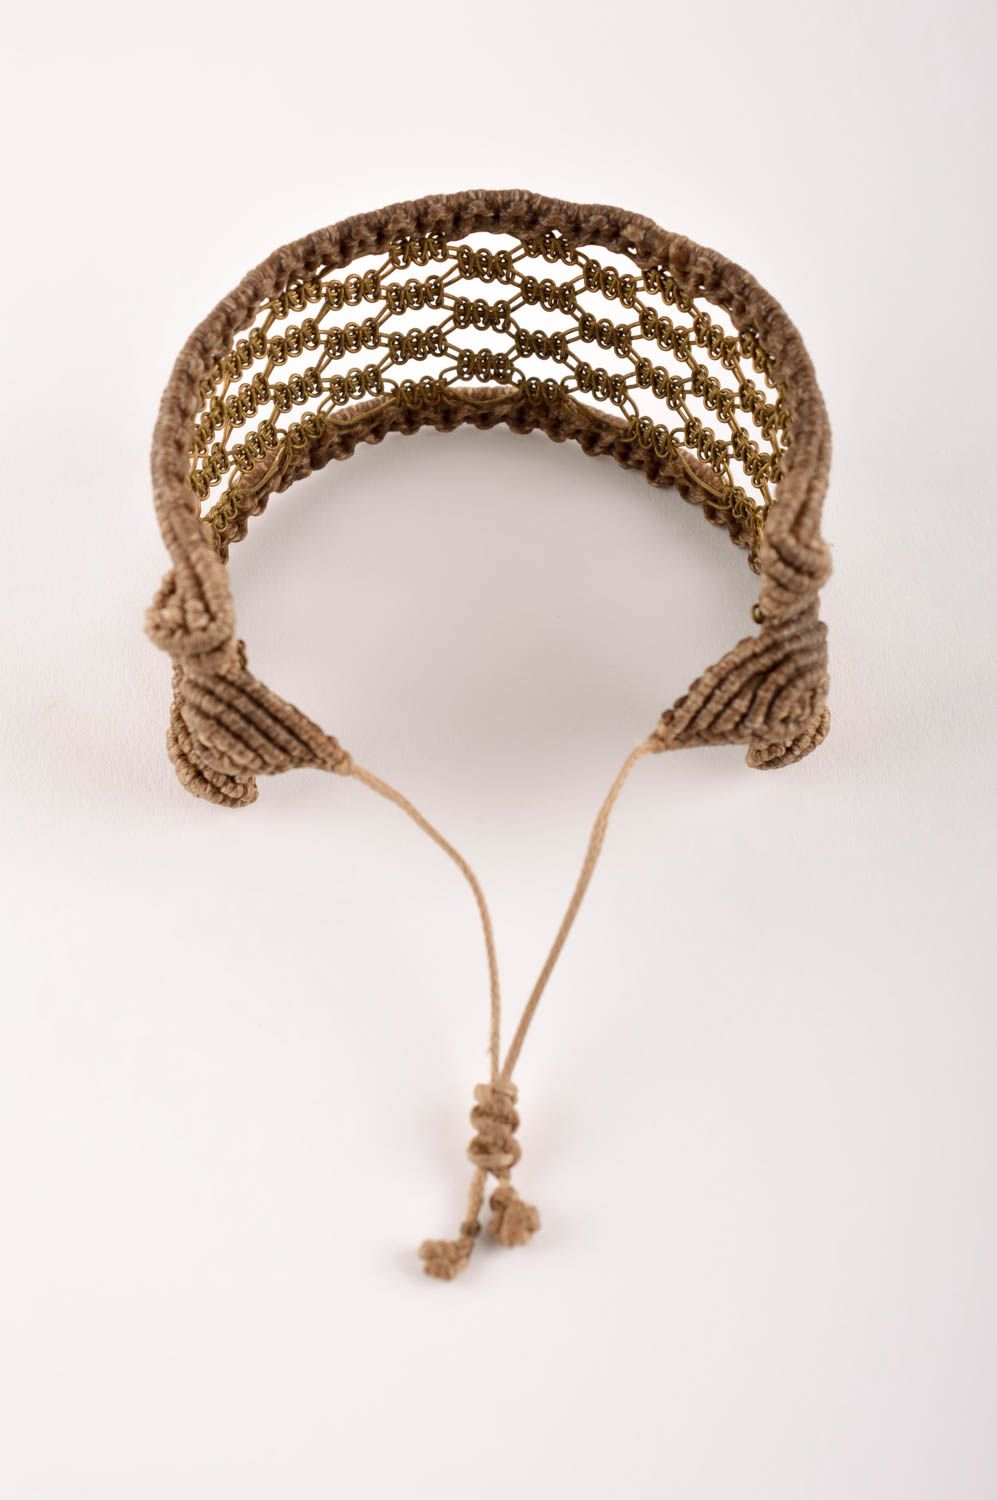 Unusual handmade metal bracelet woven macrame bracelet designs gifts for her photo 4